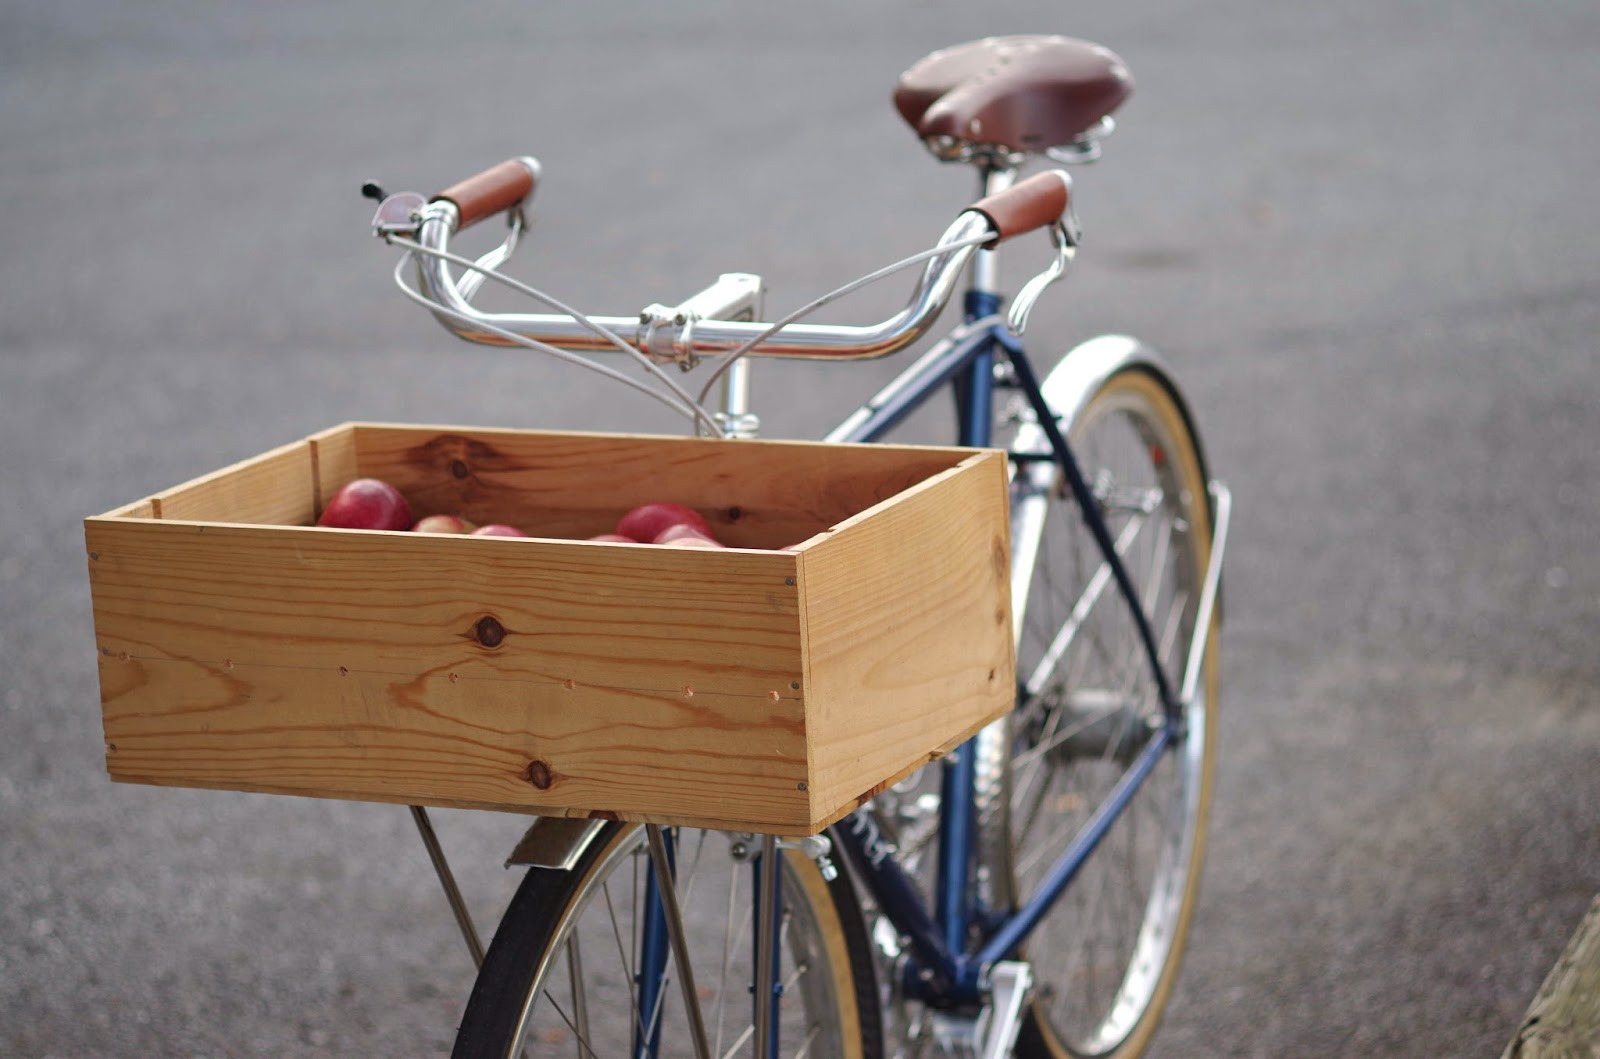 DIY Front Bike Rack
 The Velo ORANGE Blog Wine Crate Bike Basket A DIY Bike